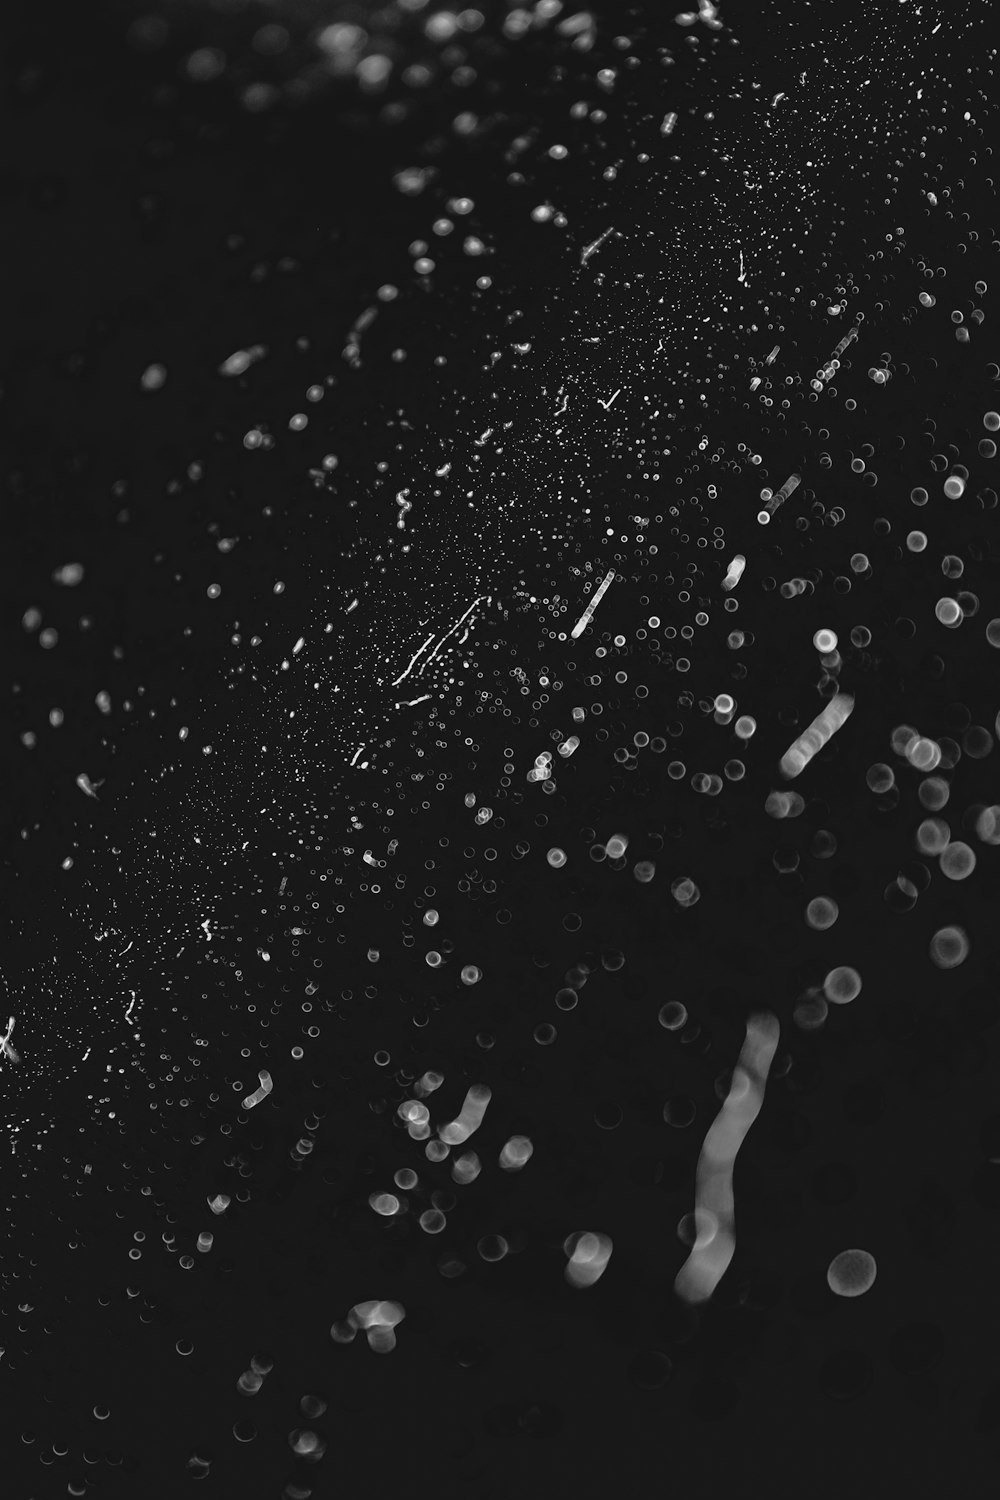 a black and white photo of rain drops